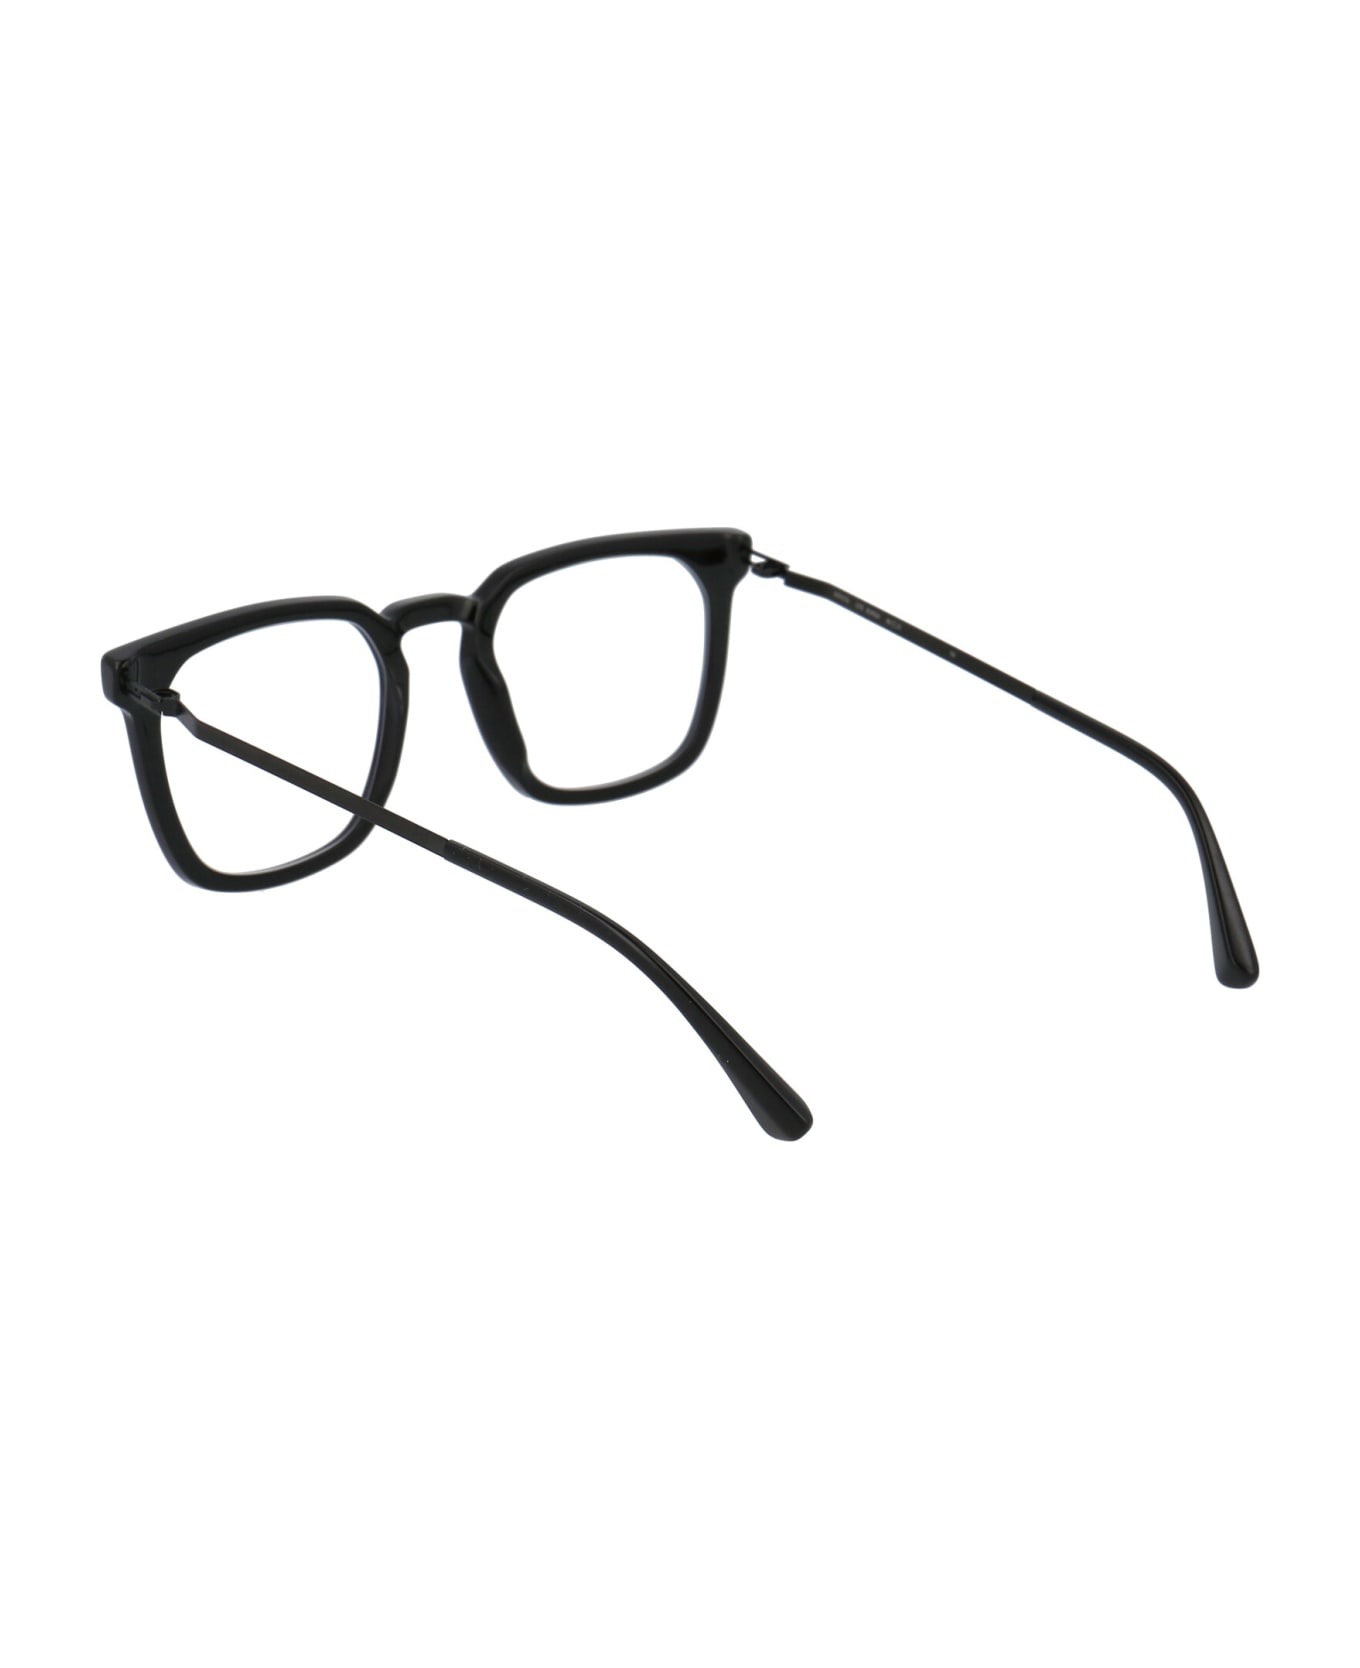 Mykita Borga Glasses - 877 C95 Black/Silver/Black Clear アイウェア